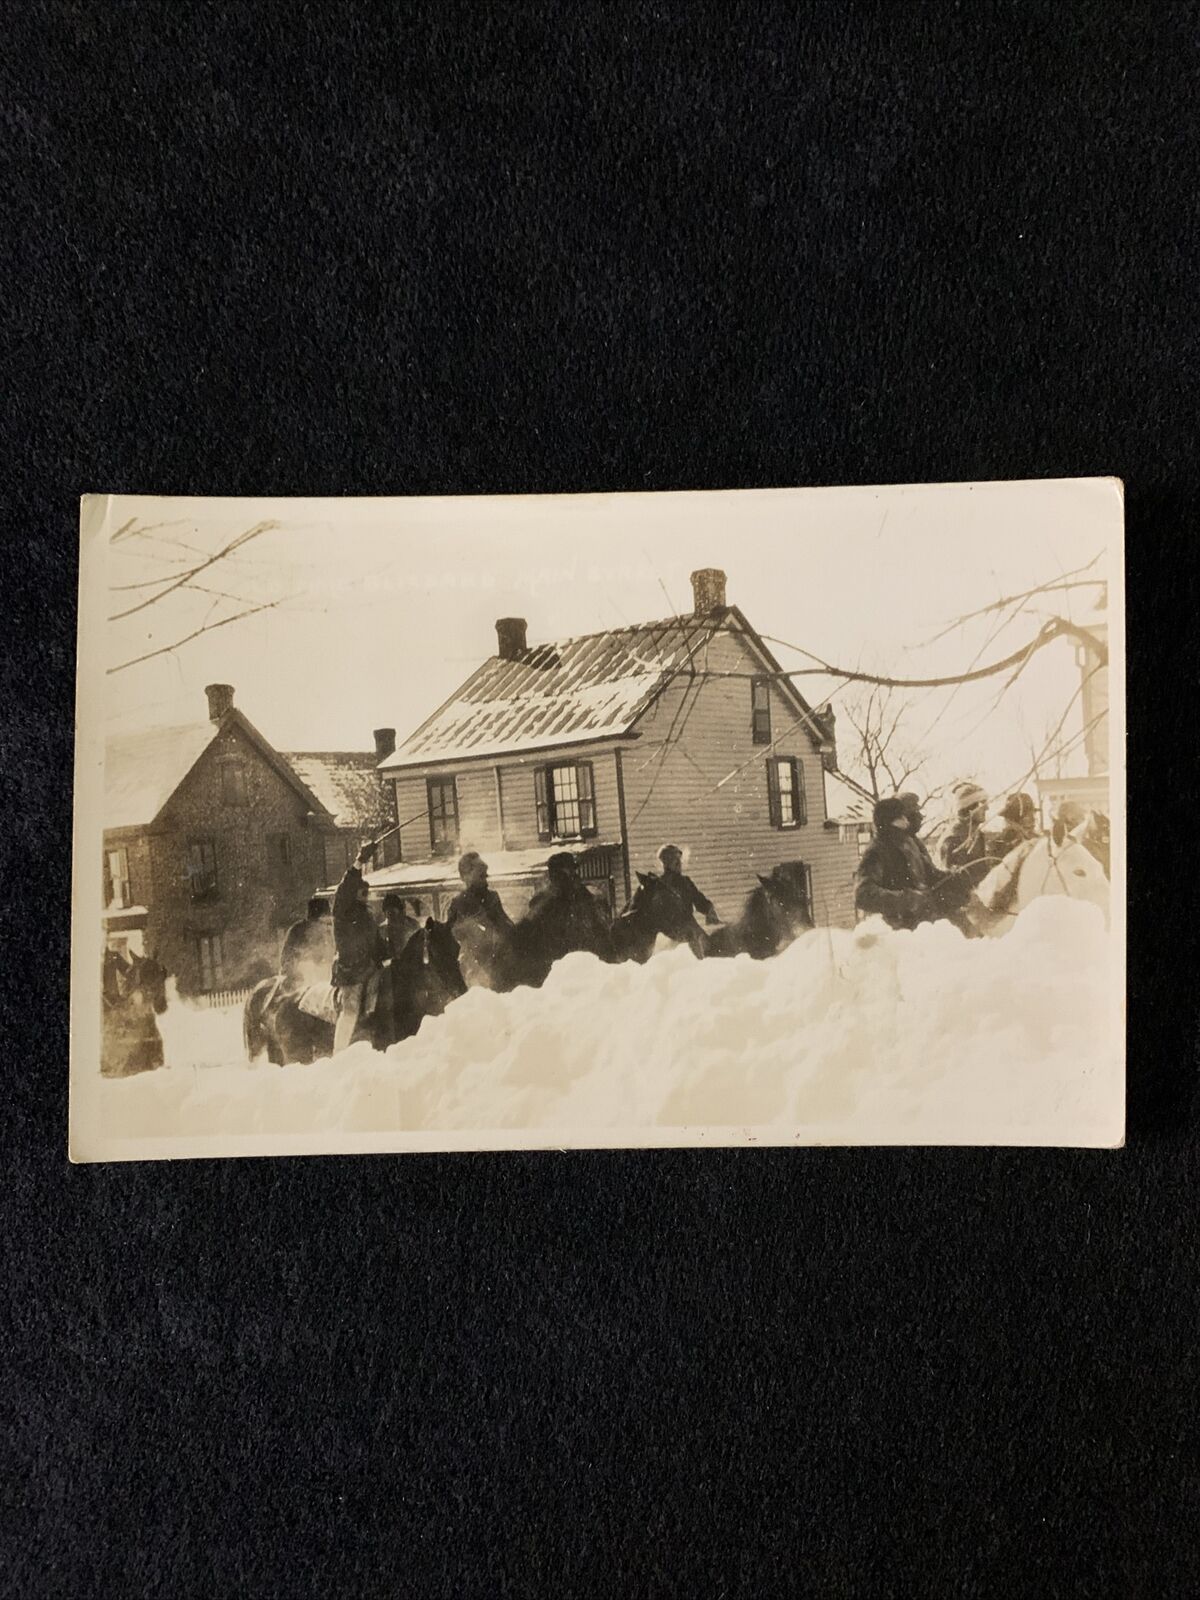 RPPC Postcard Line Of Men On Horseback In Snow Through Town c.1904-1918. Unpost